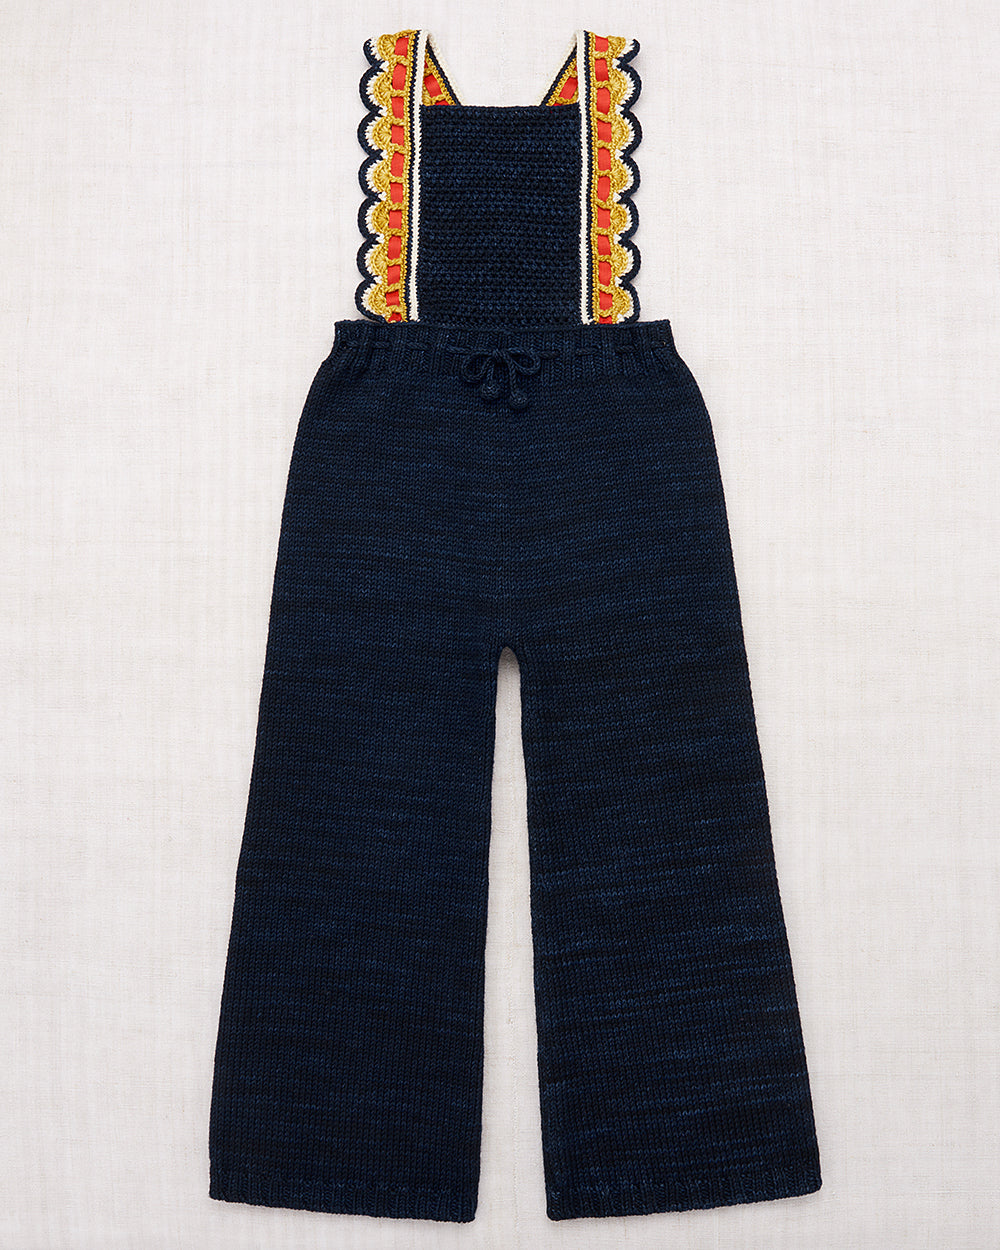 misha&puff overall shorts maritime blue-